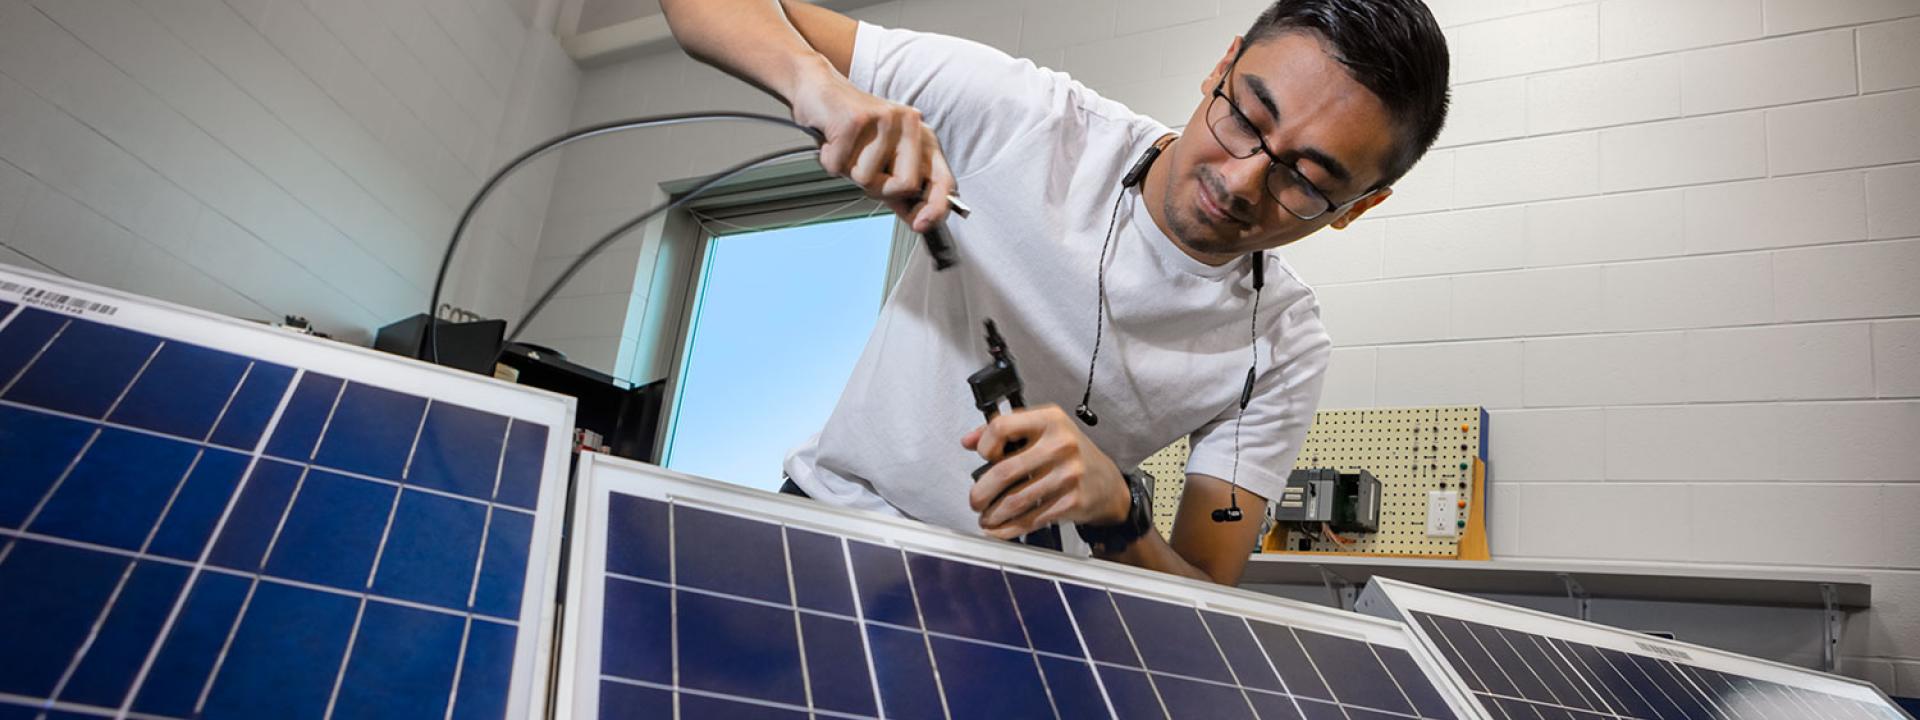 Engineering Student working on solar panels